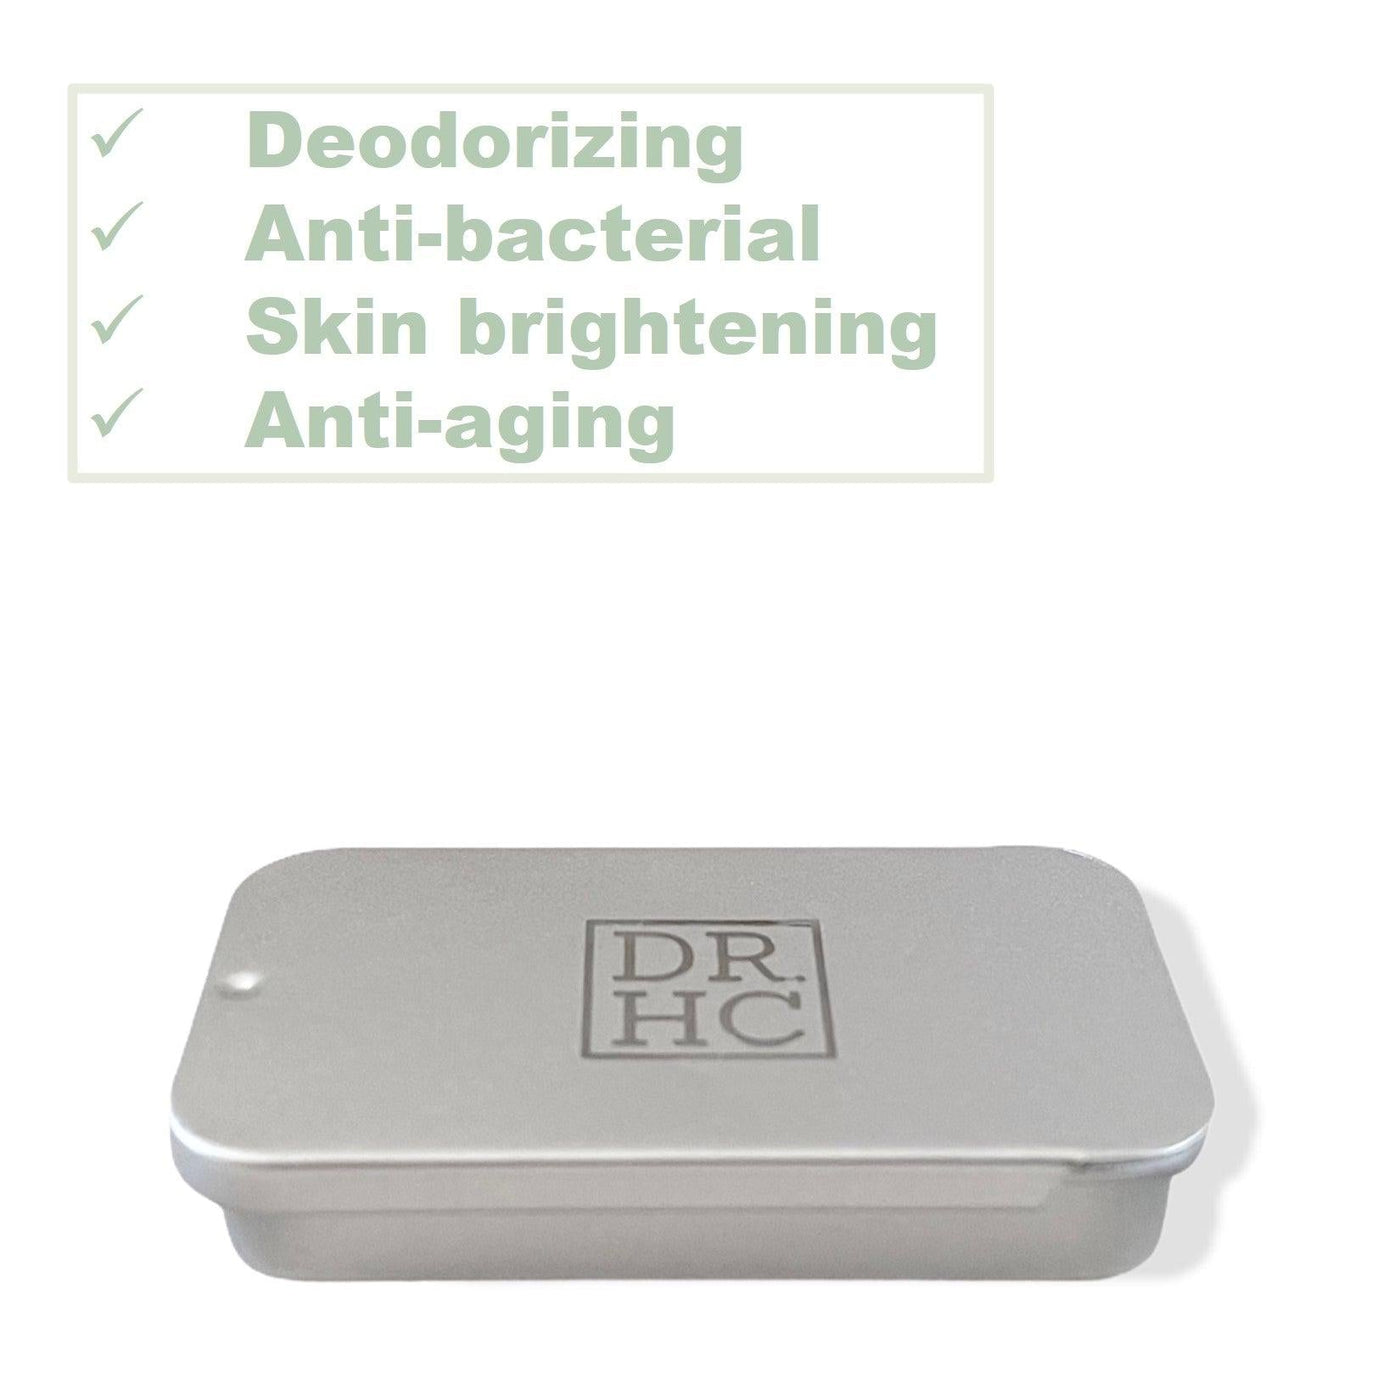 DR.HC All-Natural Brightening Herbal Deodorant (20g, 0.7oz.) (Deodorizing, Anti-bacterial, Skin brightening, Anti-aging...)-5